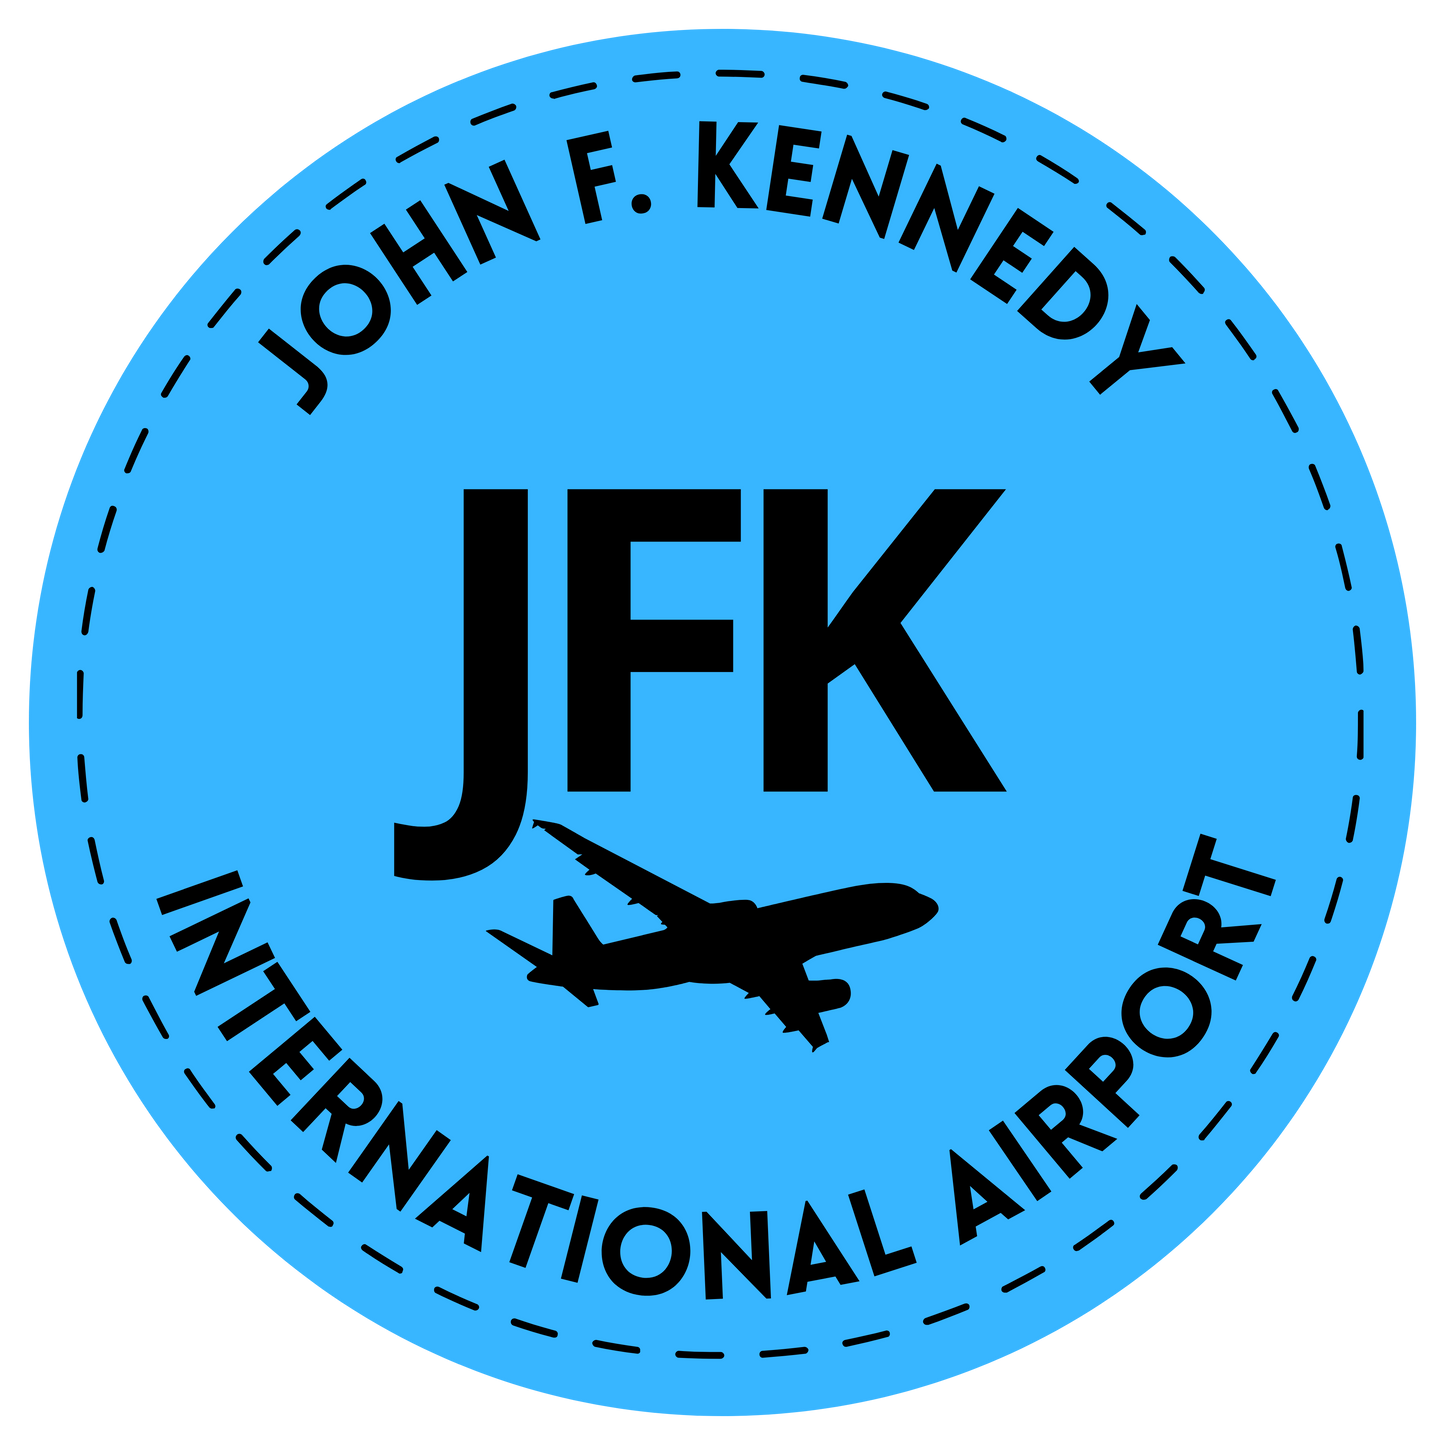 JFK John F Kennedy International Airport Round Blue Sticker WIth Black Letters